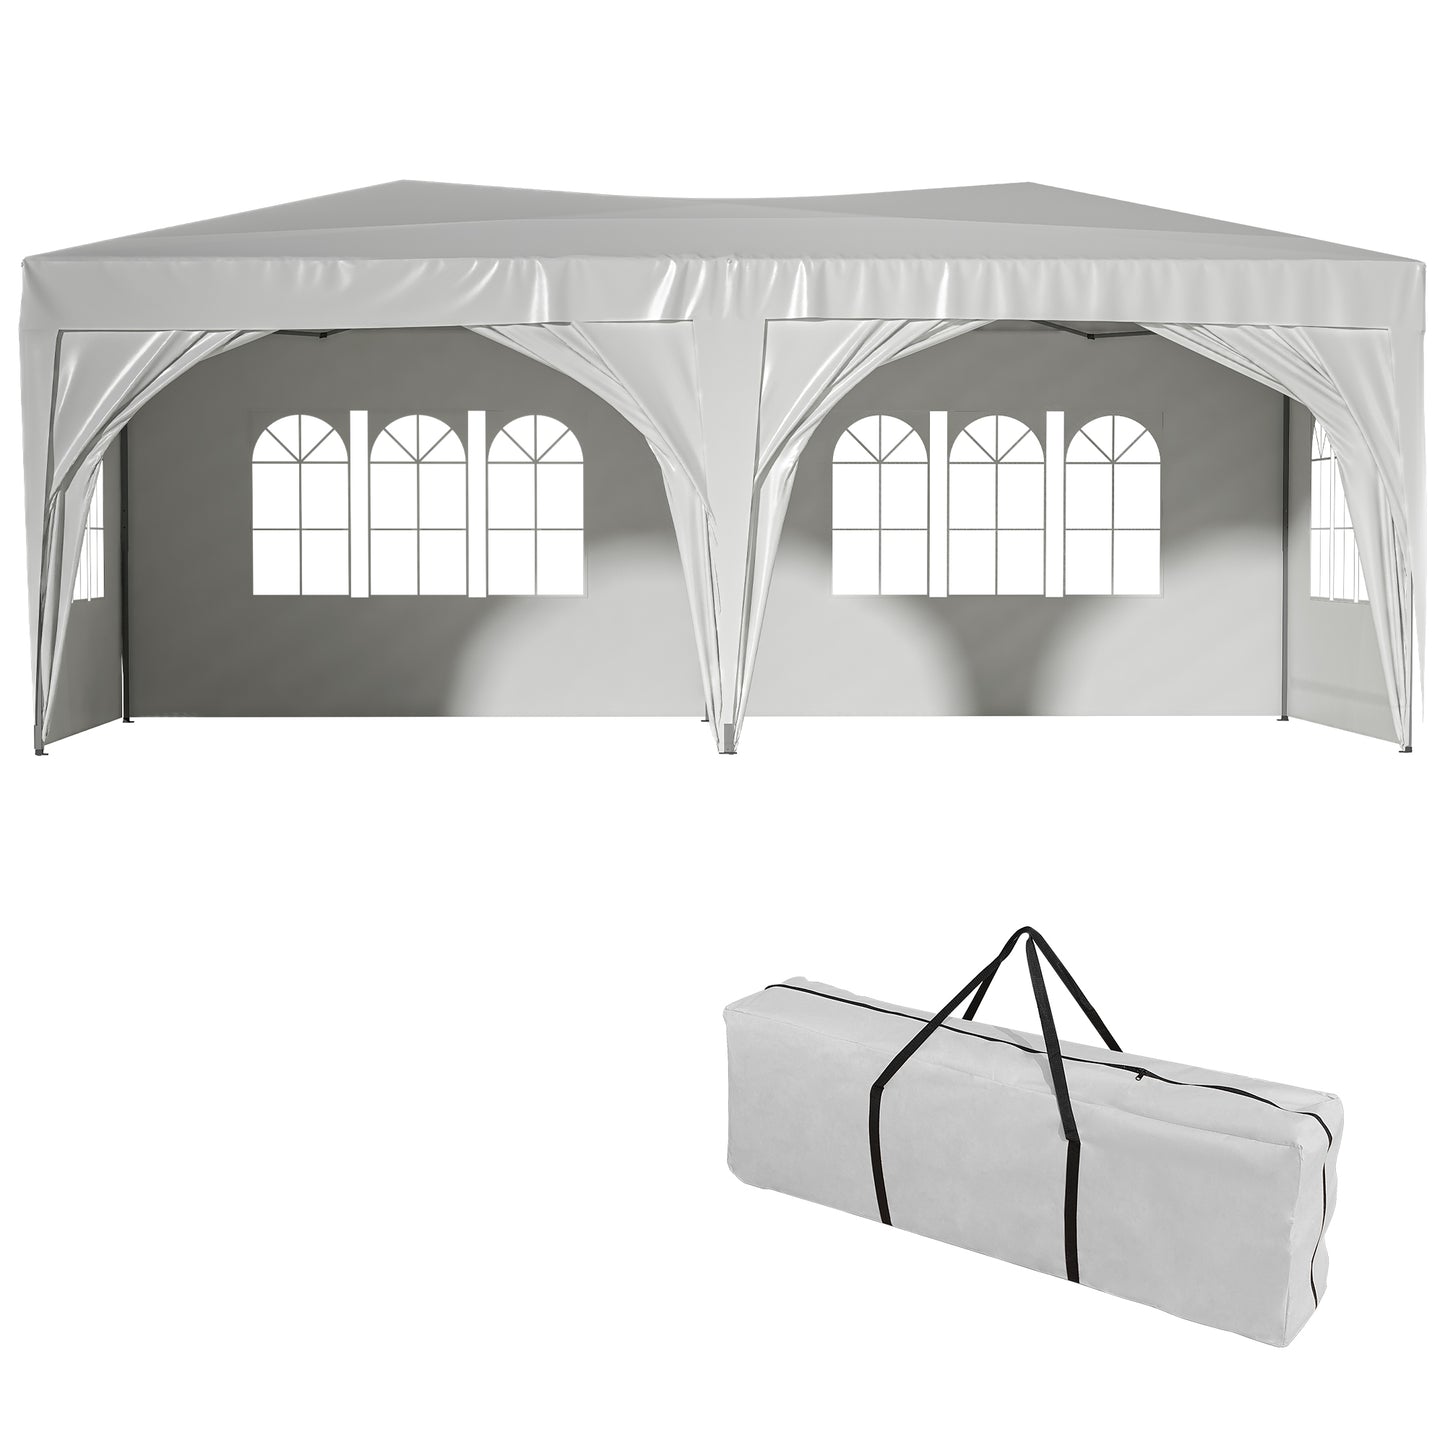 10'x20' EZ Pop Up Canopy Outdoor Portable Party Folding Tent Beige White